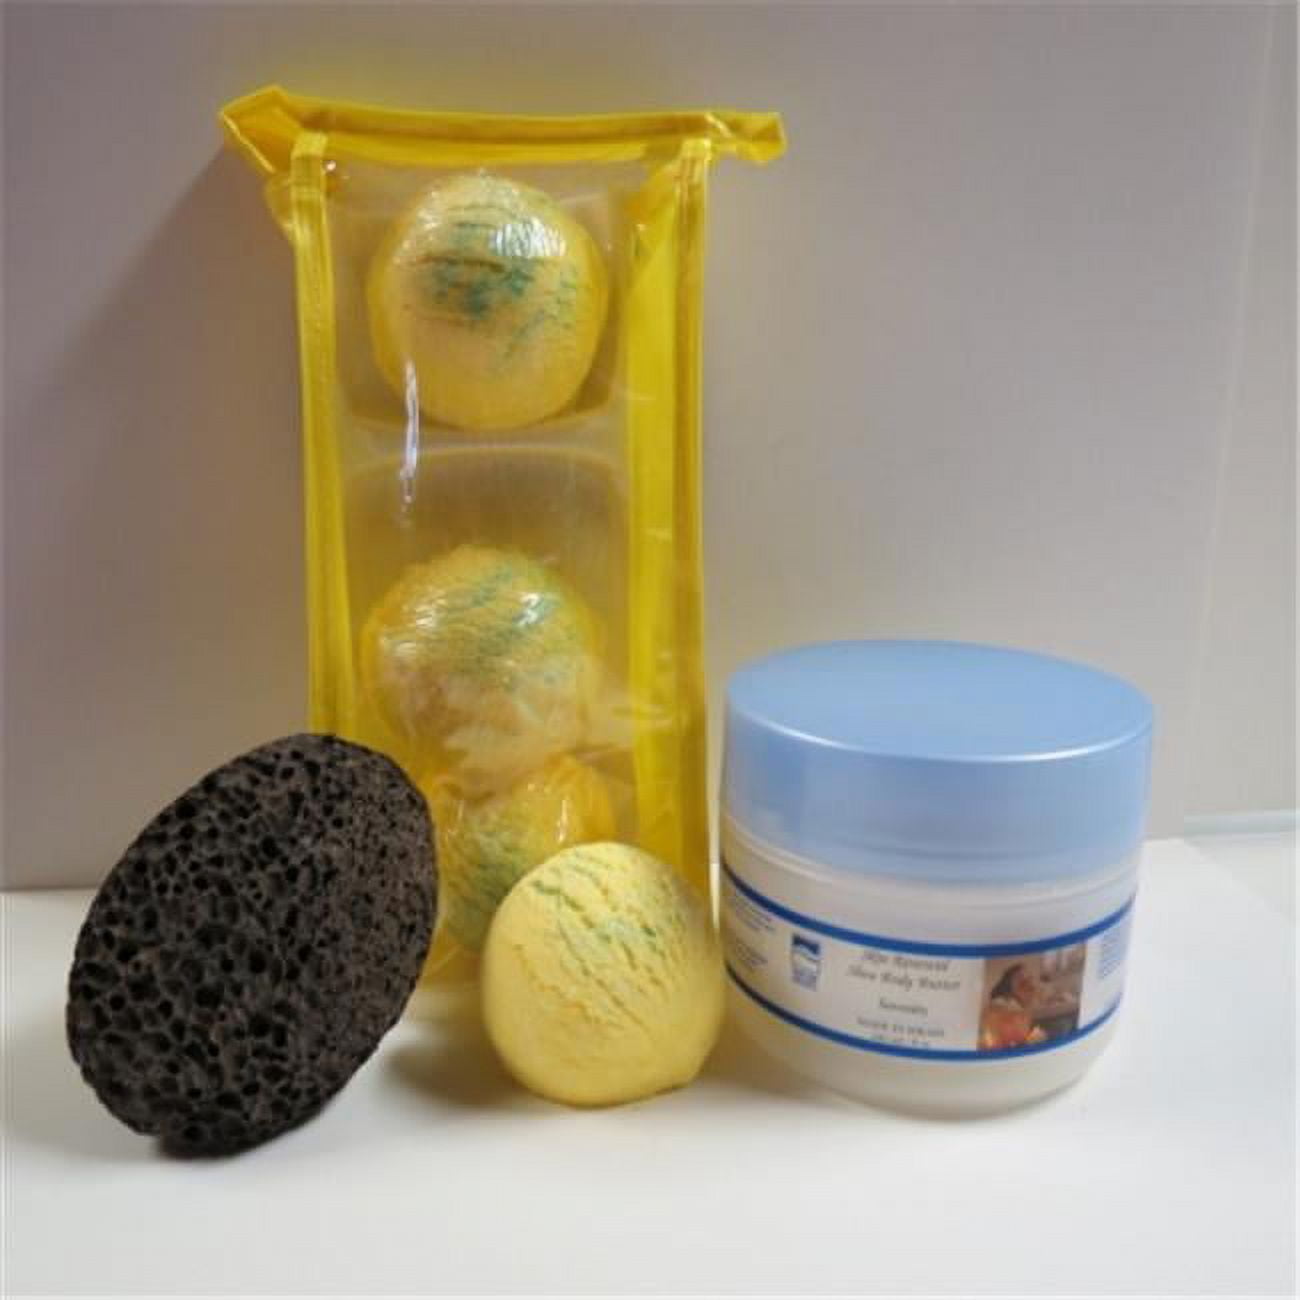 Deadsea-bbtlv02 3 Pack Lemmon Verbena Bubble Bath Truffles, 8 Oz Serenity Shea Butter & Pumice Stone